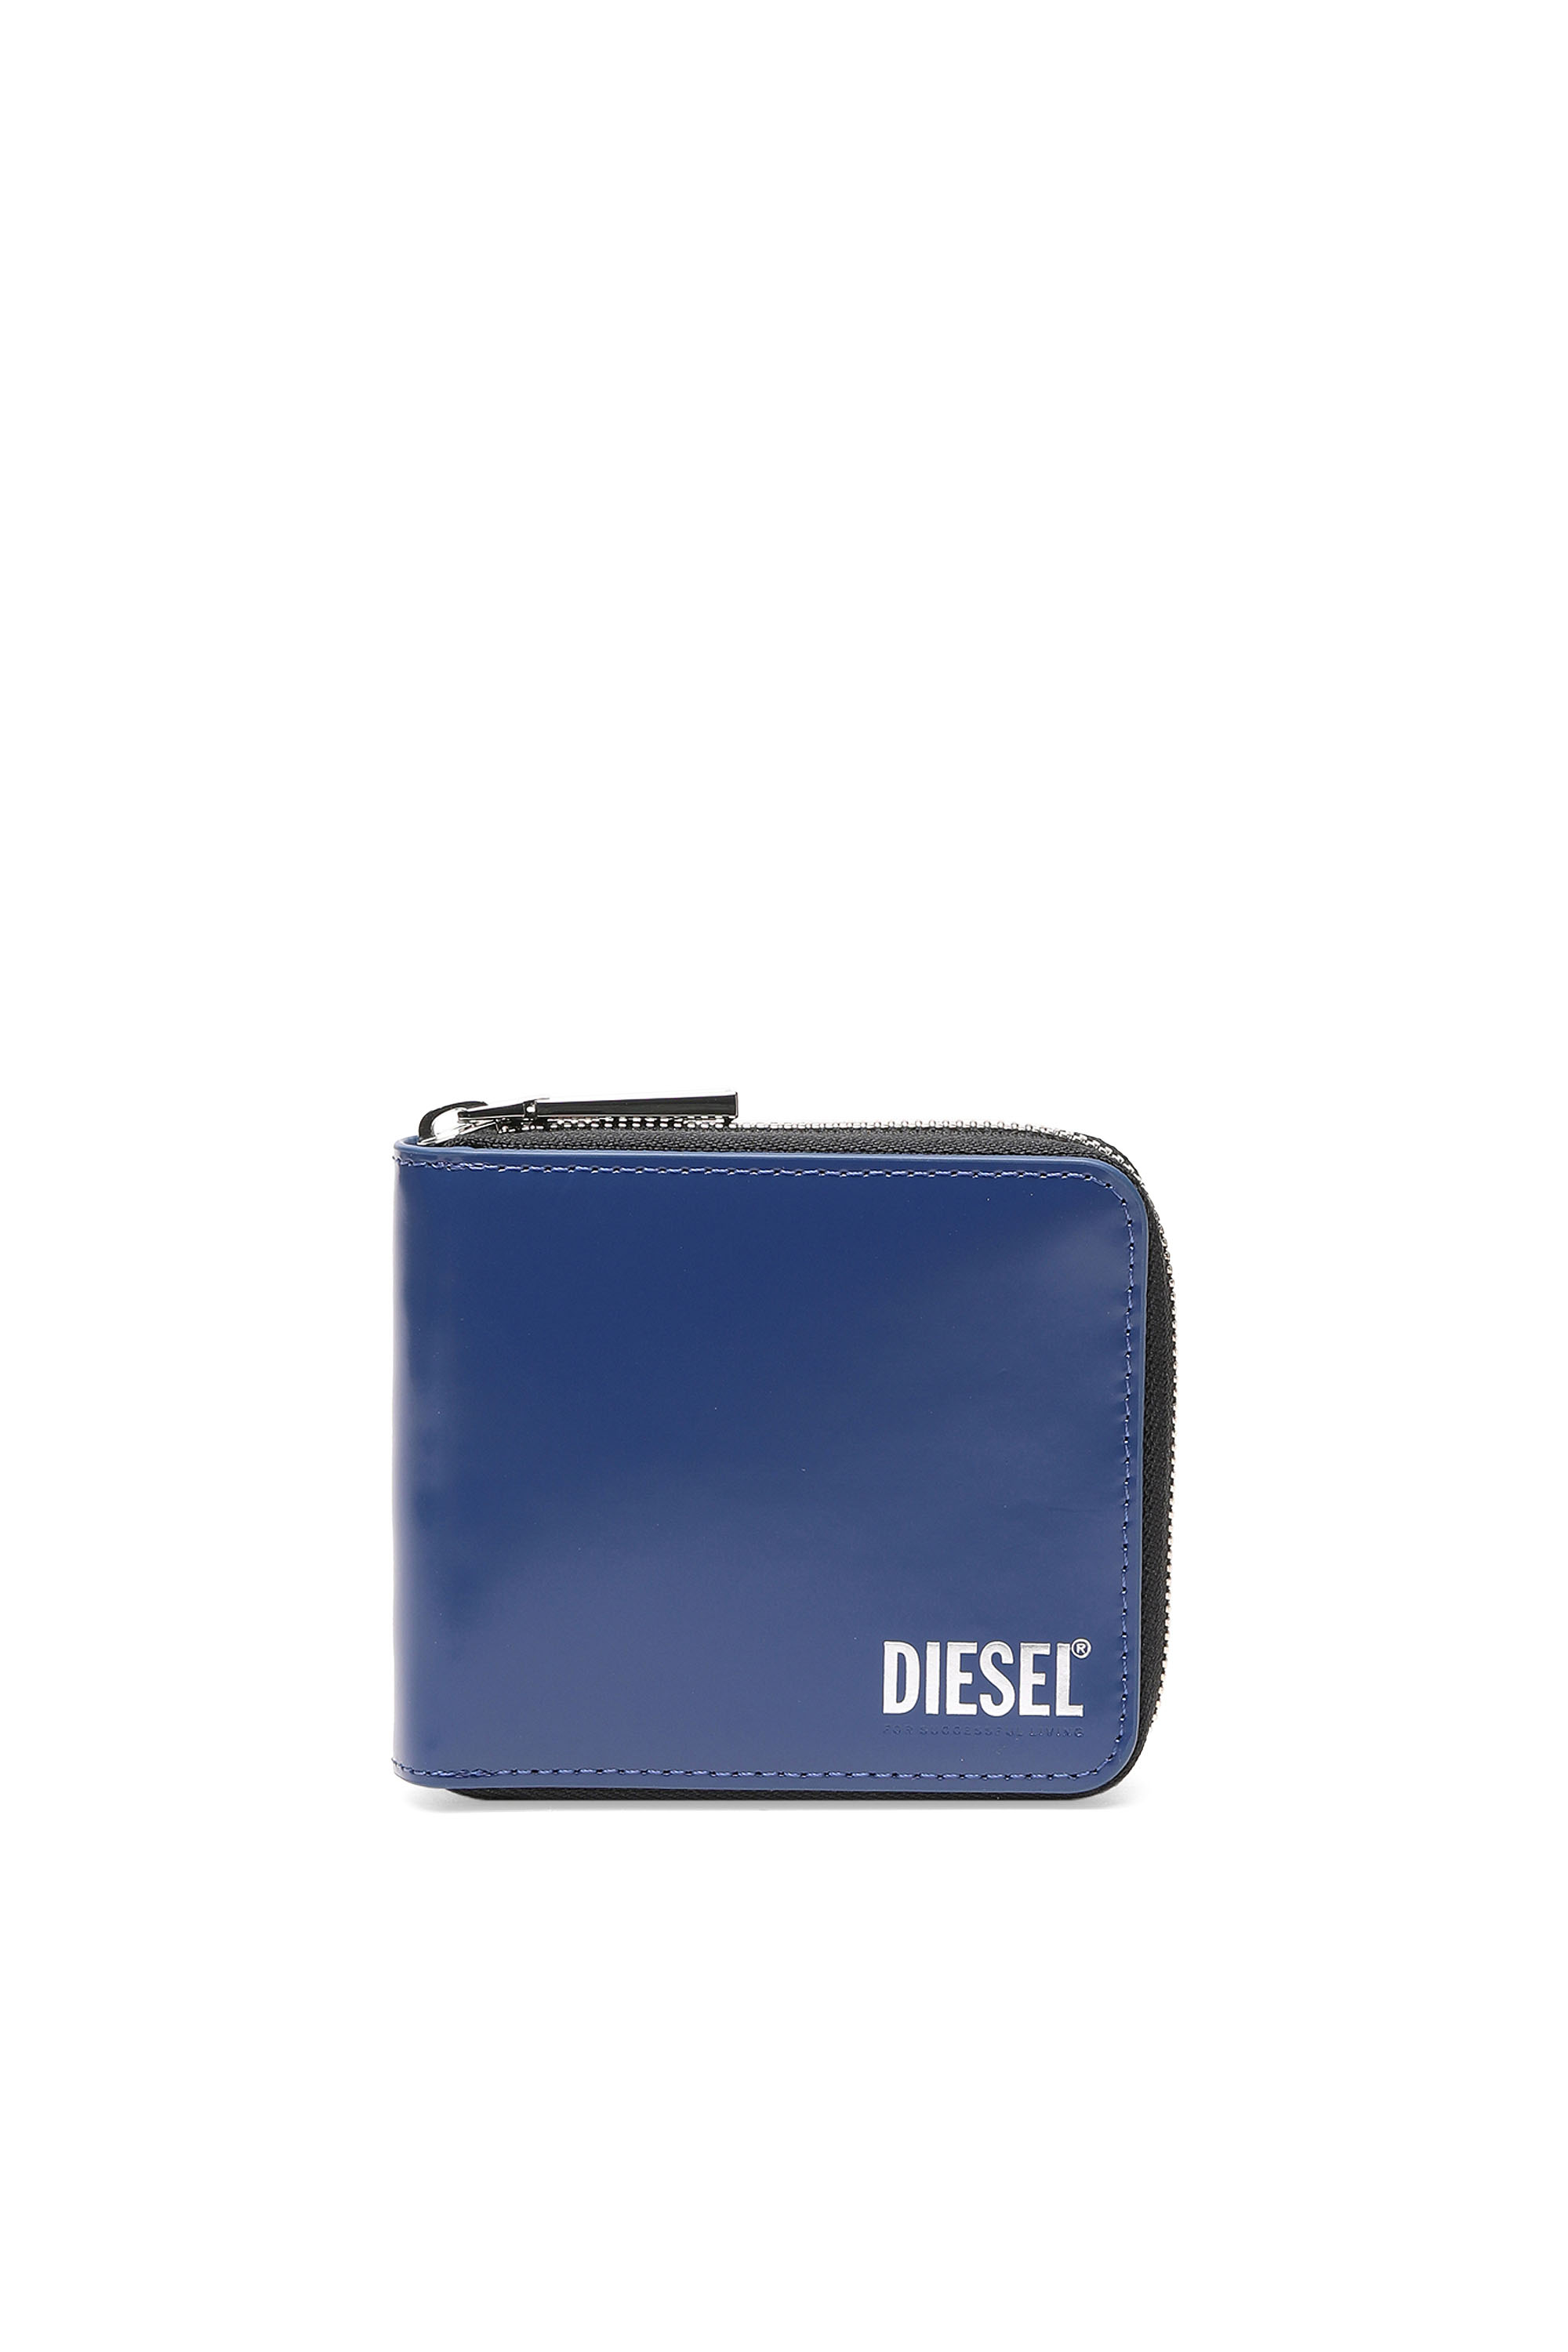 Diesel - HIRESH XS ZIPPI, Azul - Image 1